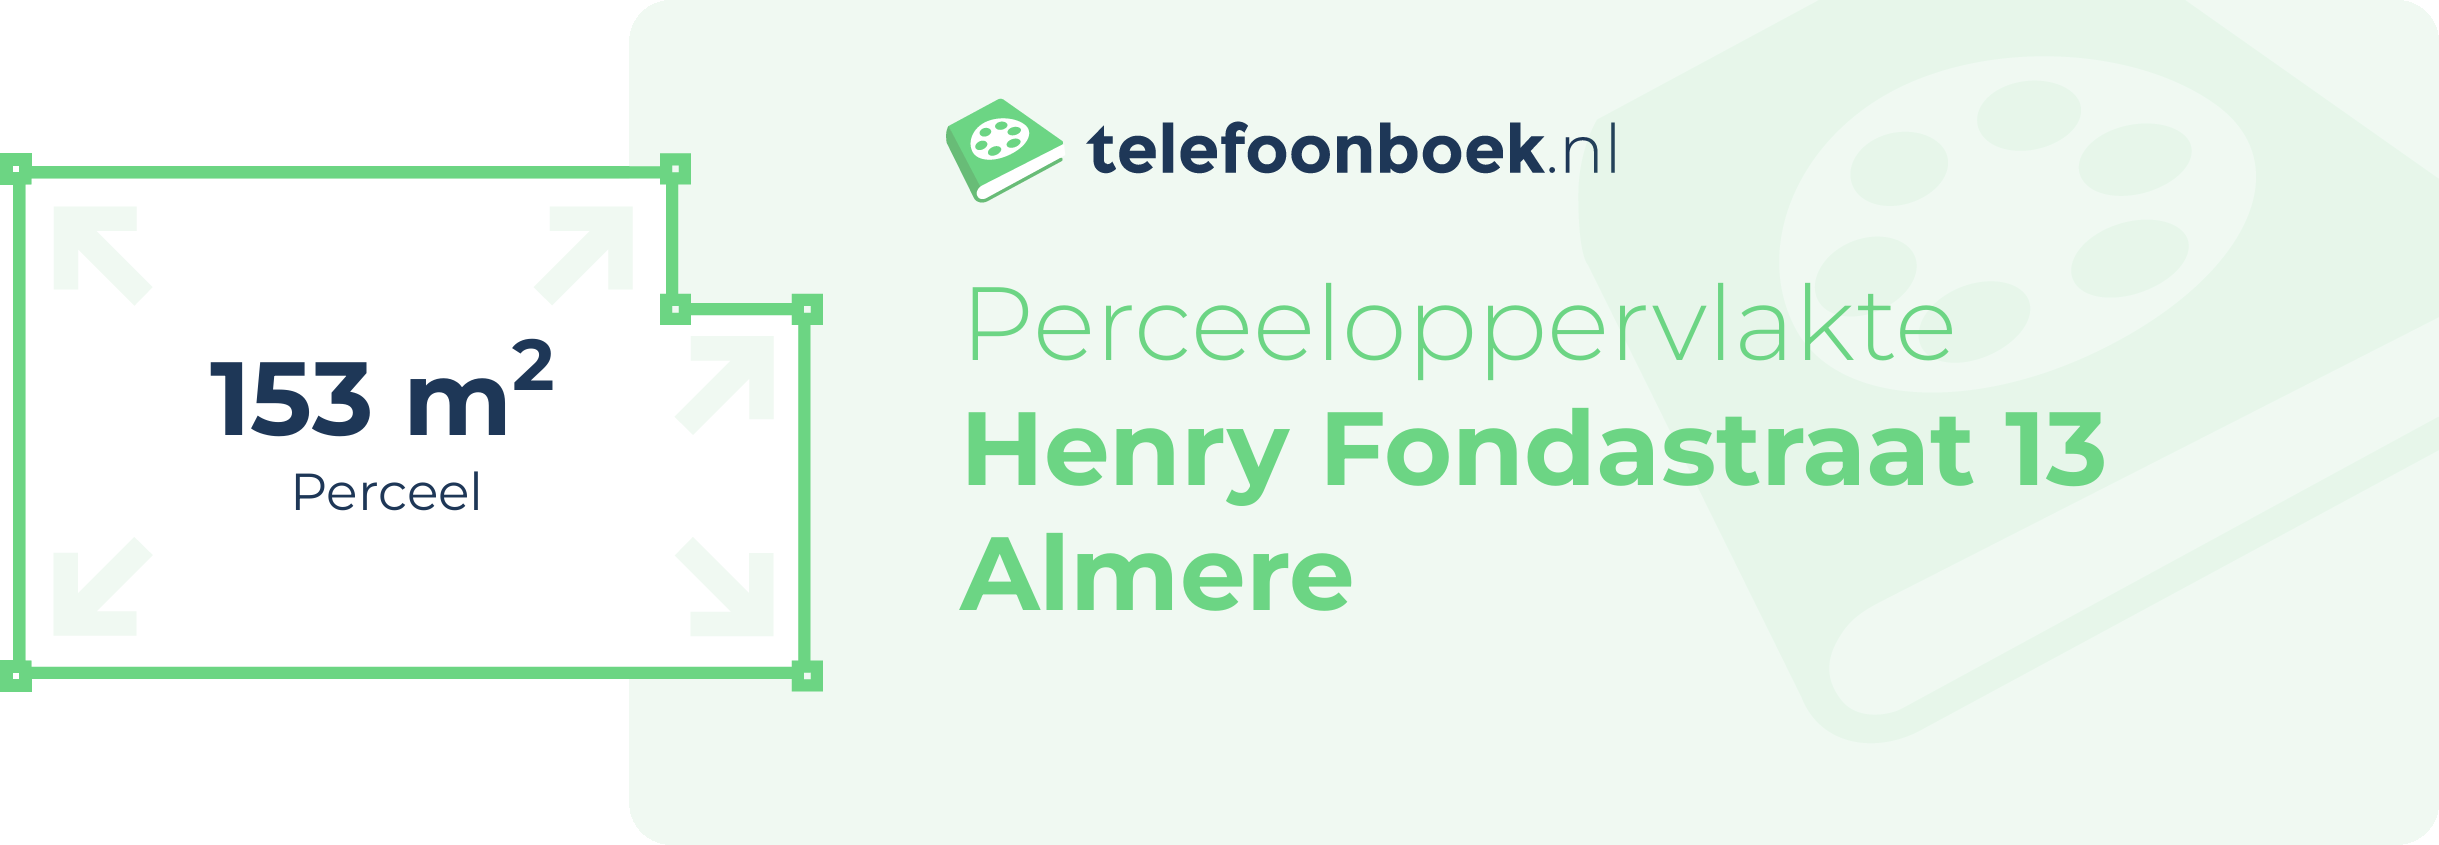 Perceeloppervlakte Henry Fondastraat 13 Almere